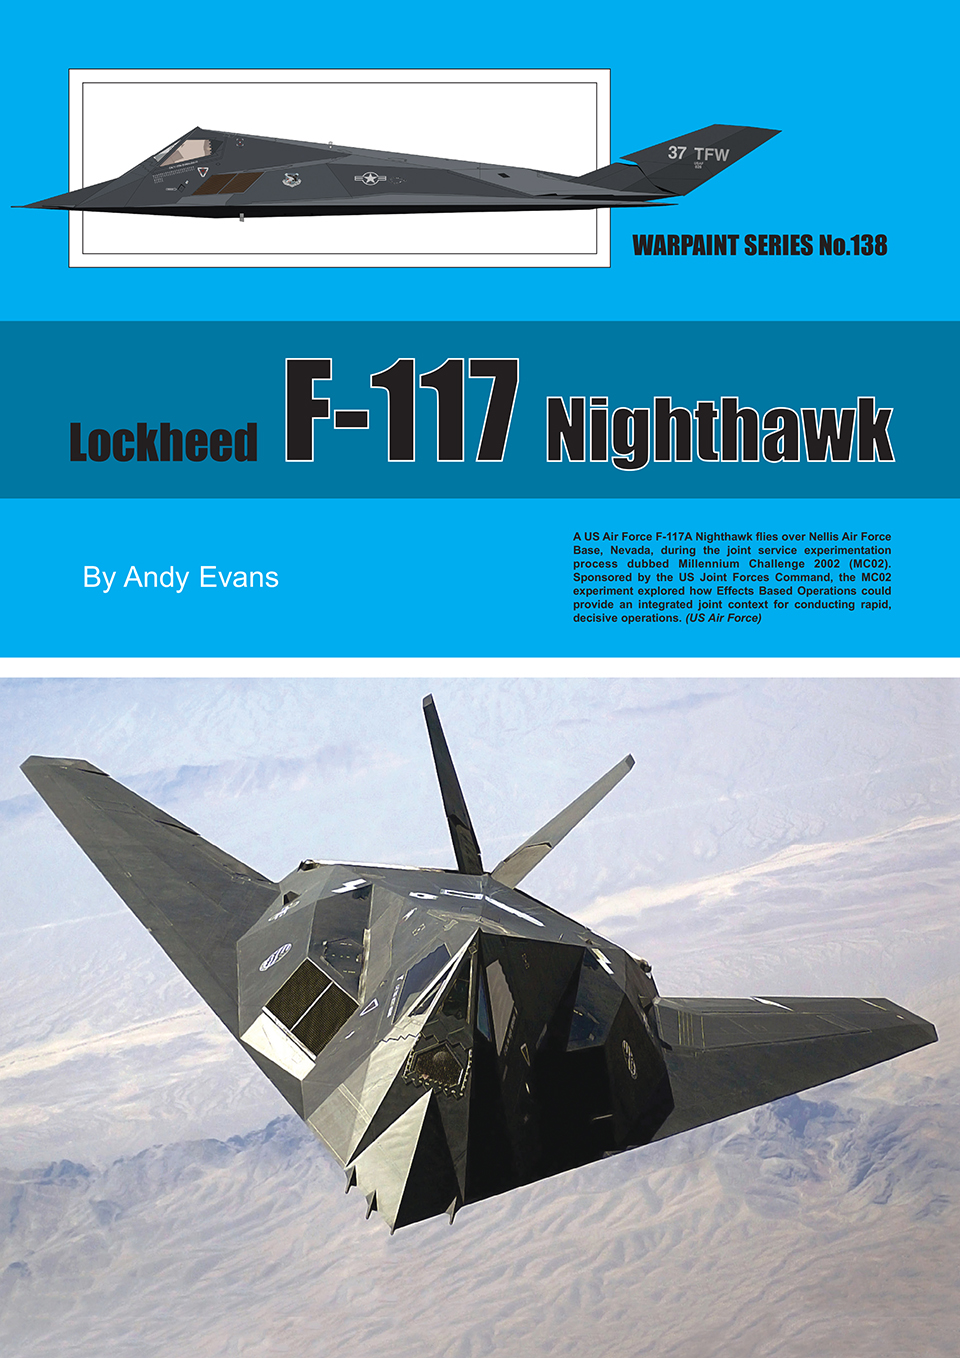 Guideline Publications Warpaint 138 Lockheed F-117 Nighthawk PRE ORDER 